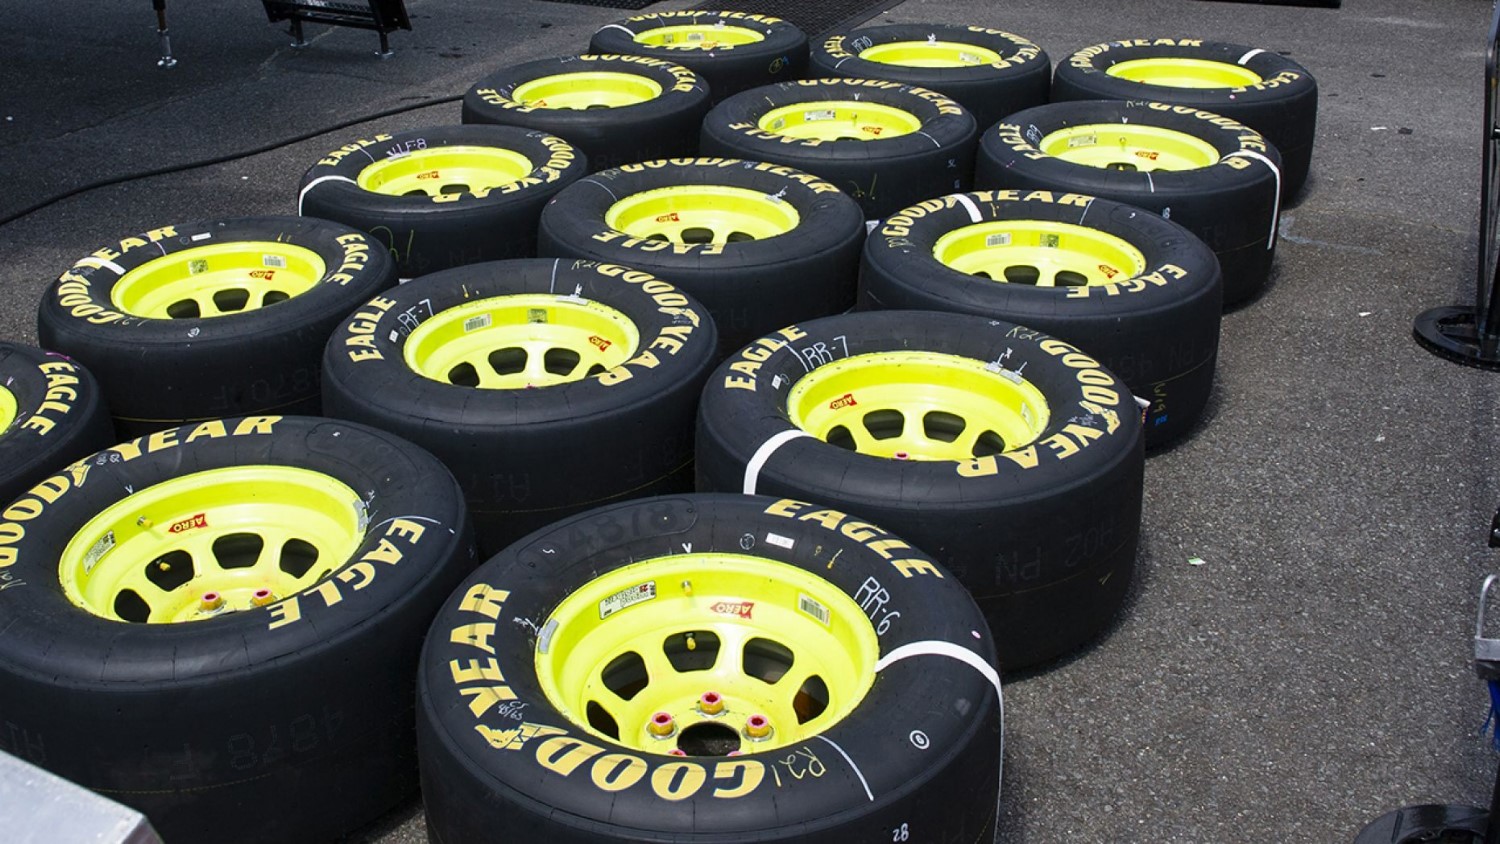 Today's NASCAR wheels